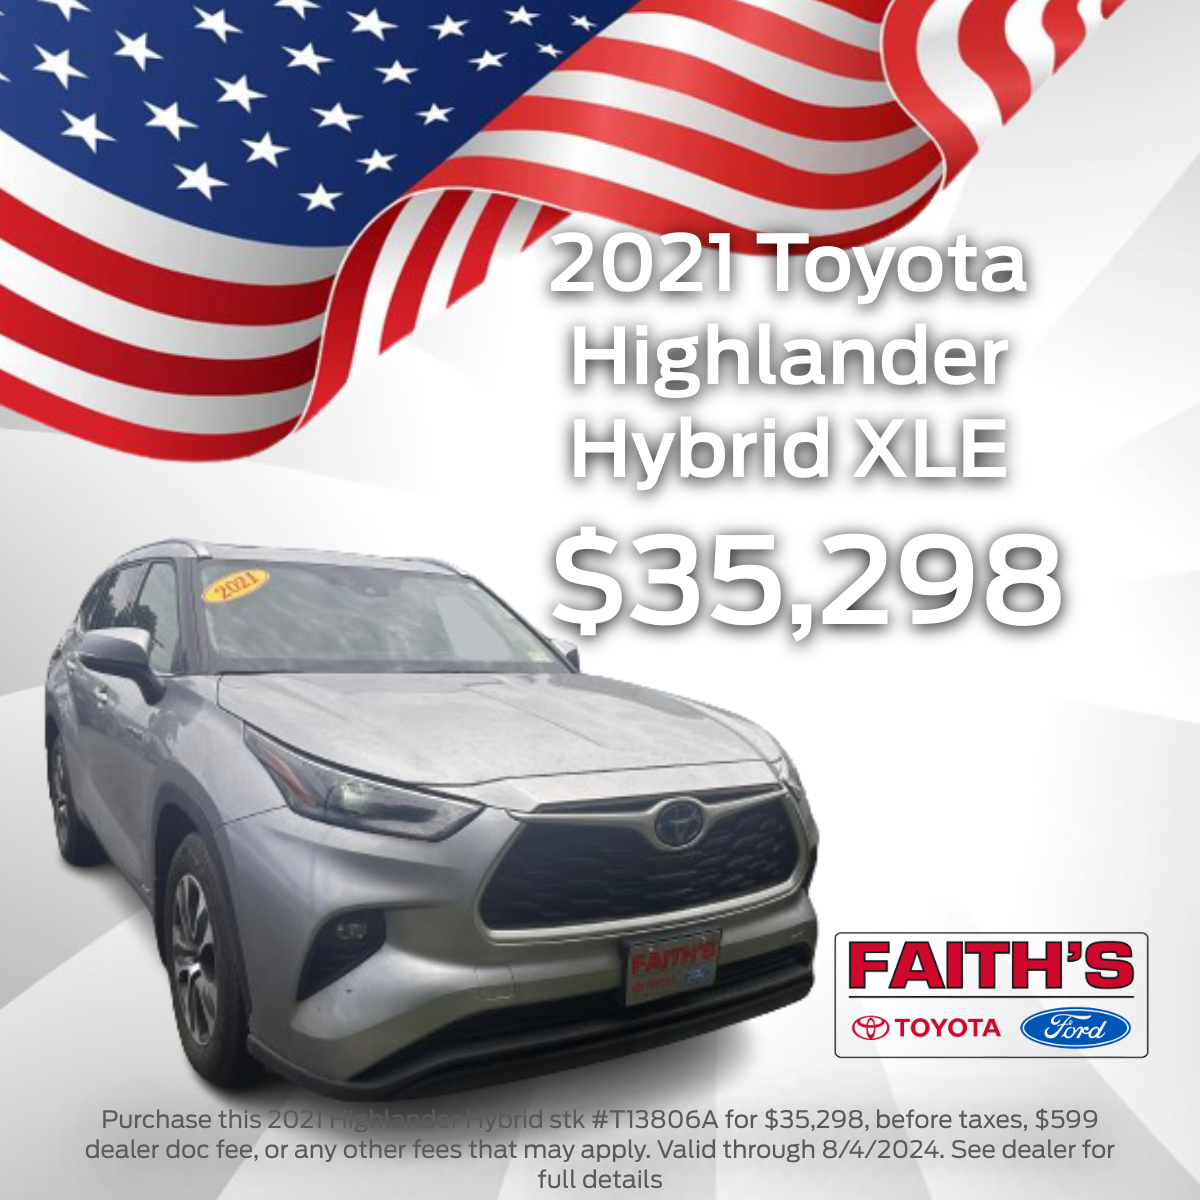 2021 Toyota Highlander Purchase Offer | Faith's Toyota